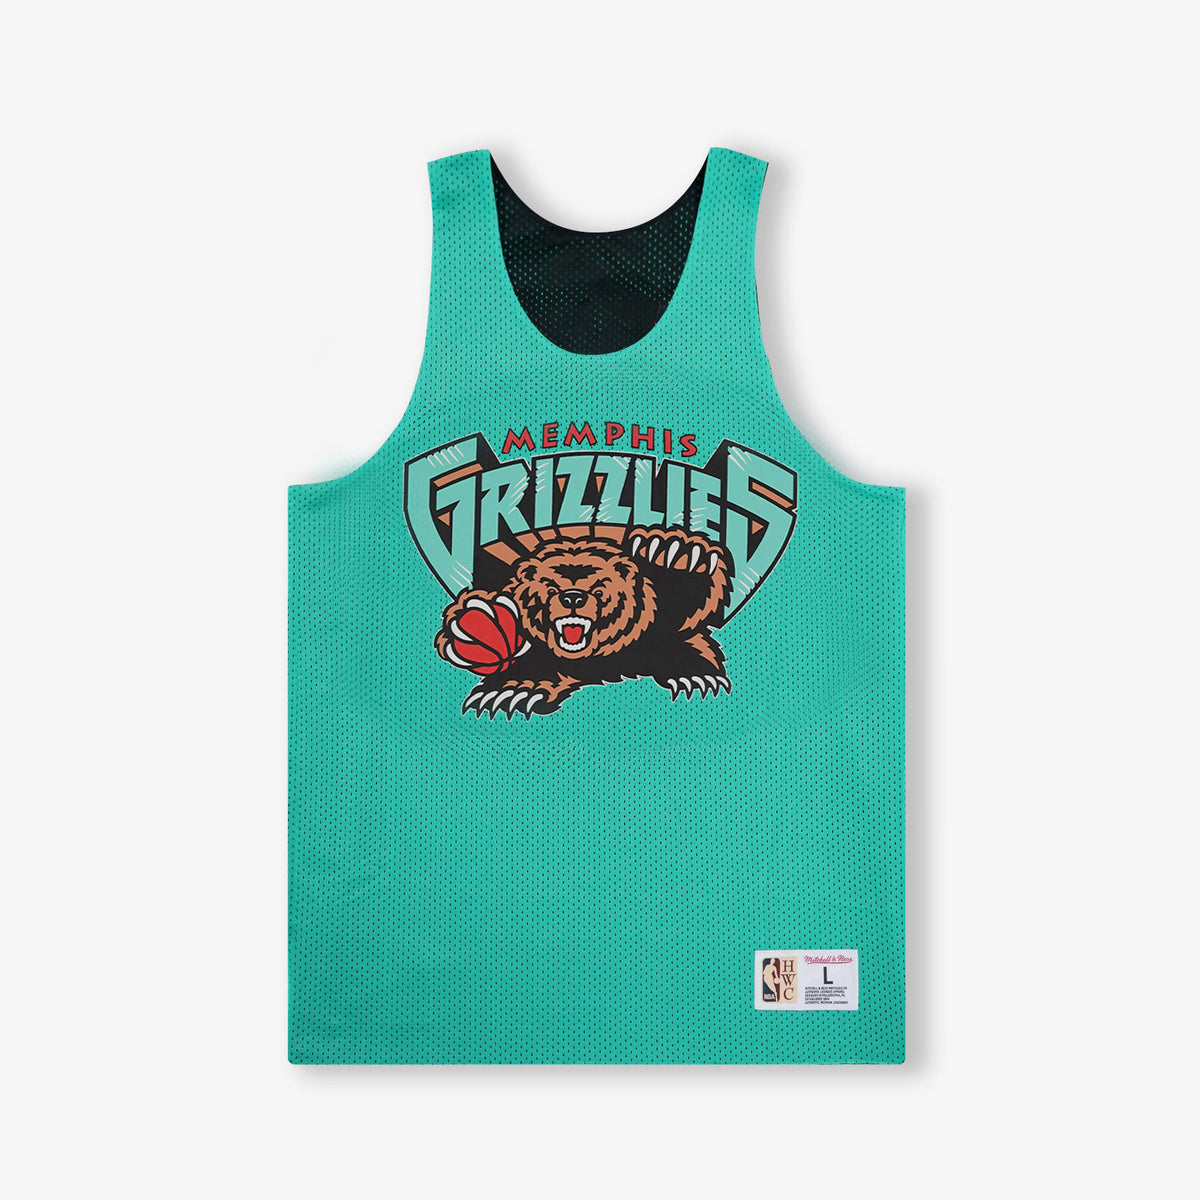 old memphis grizzlies jersey